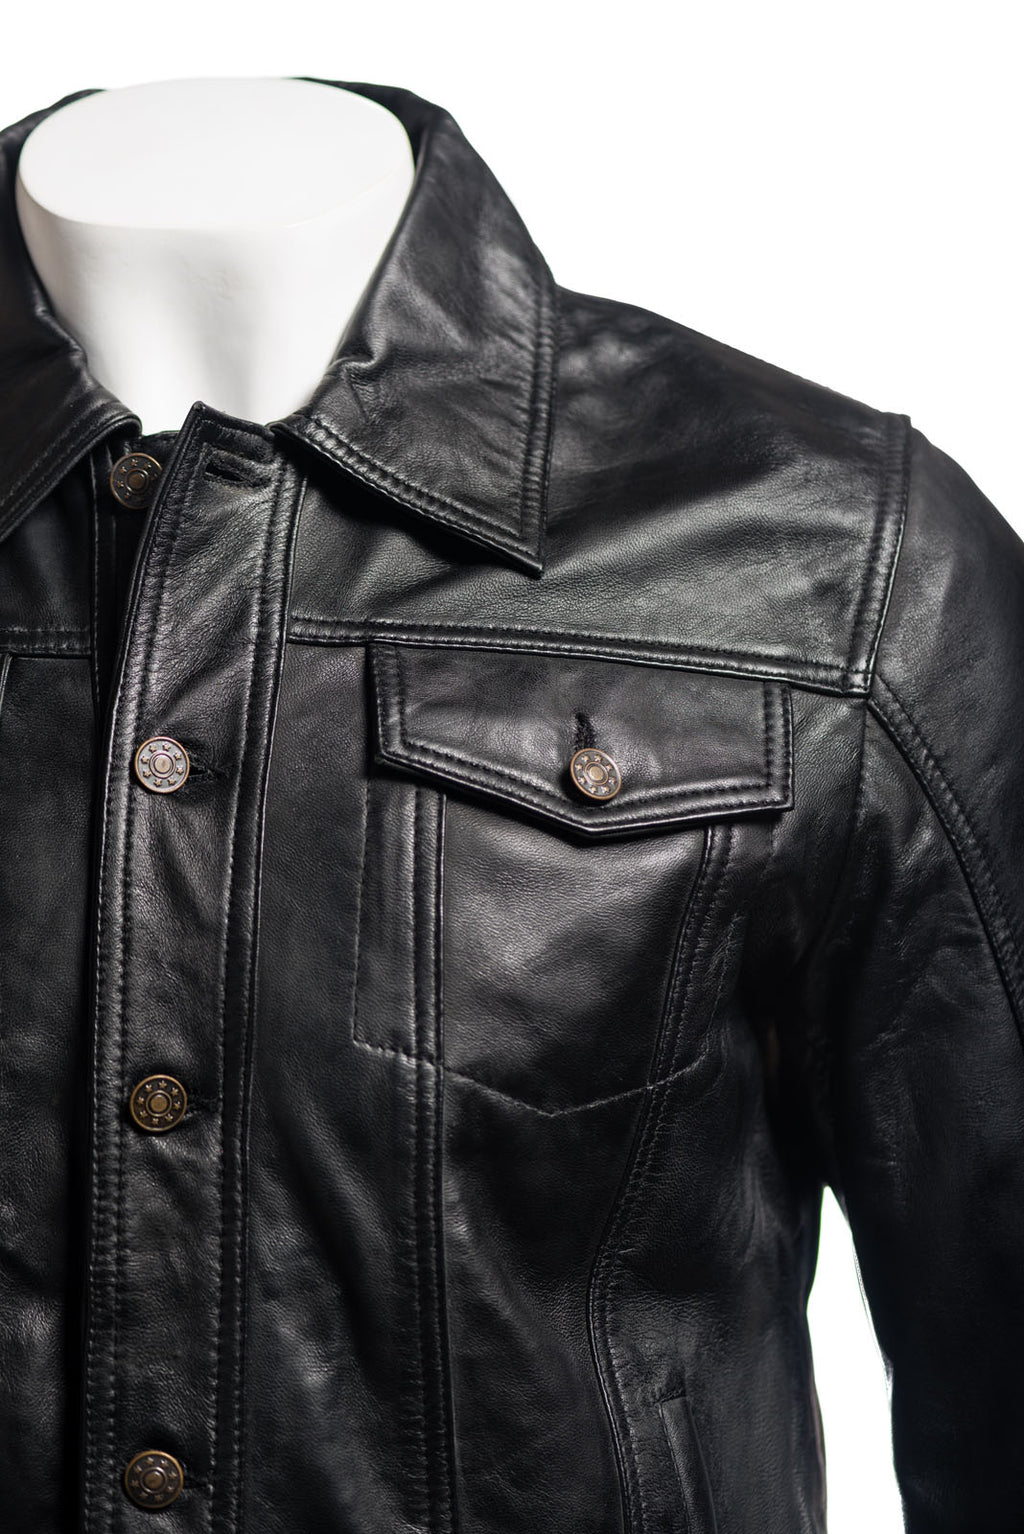 Men's Black Denim Shirt Style Leather Jacket: Antonio